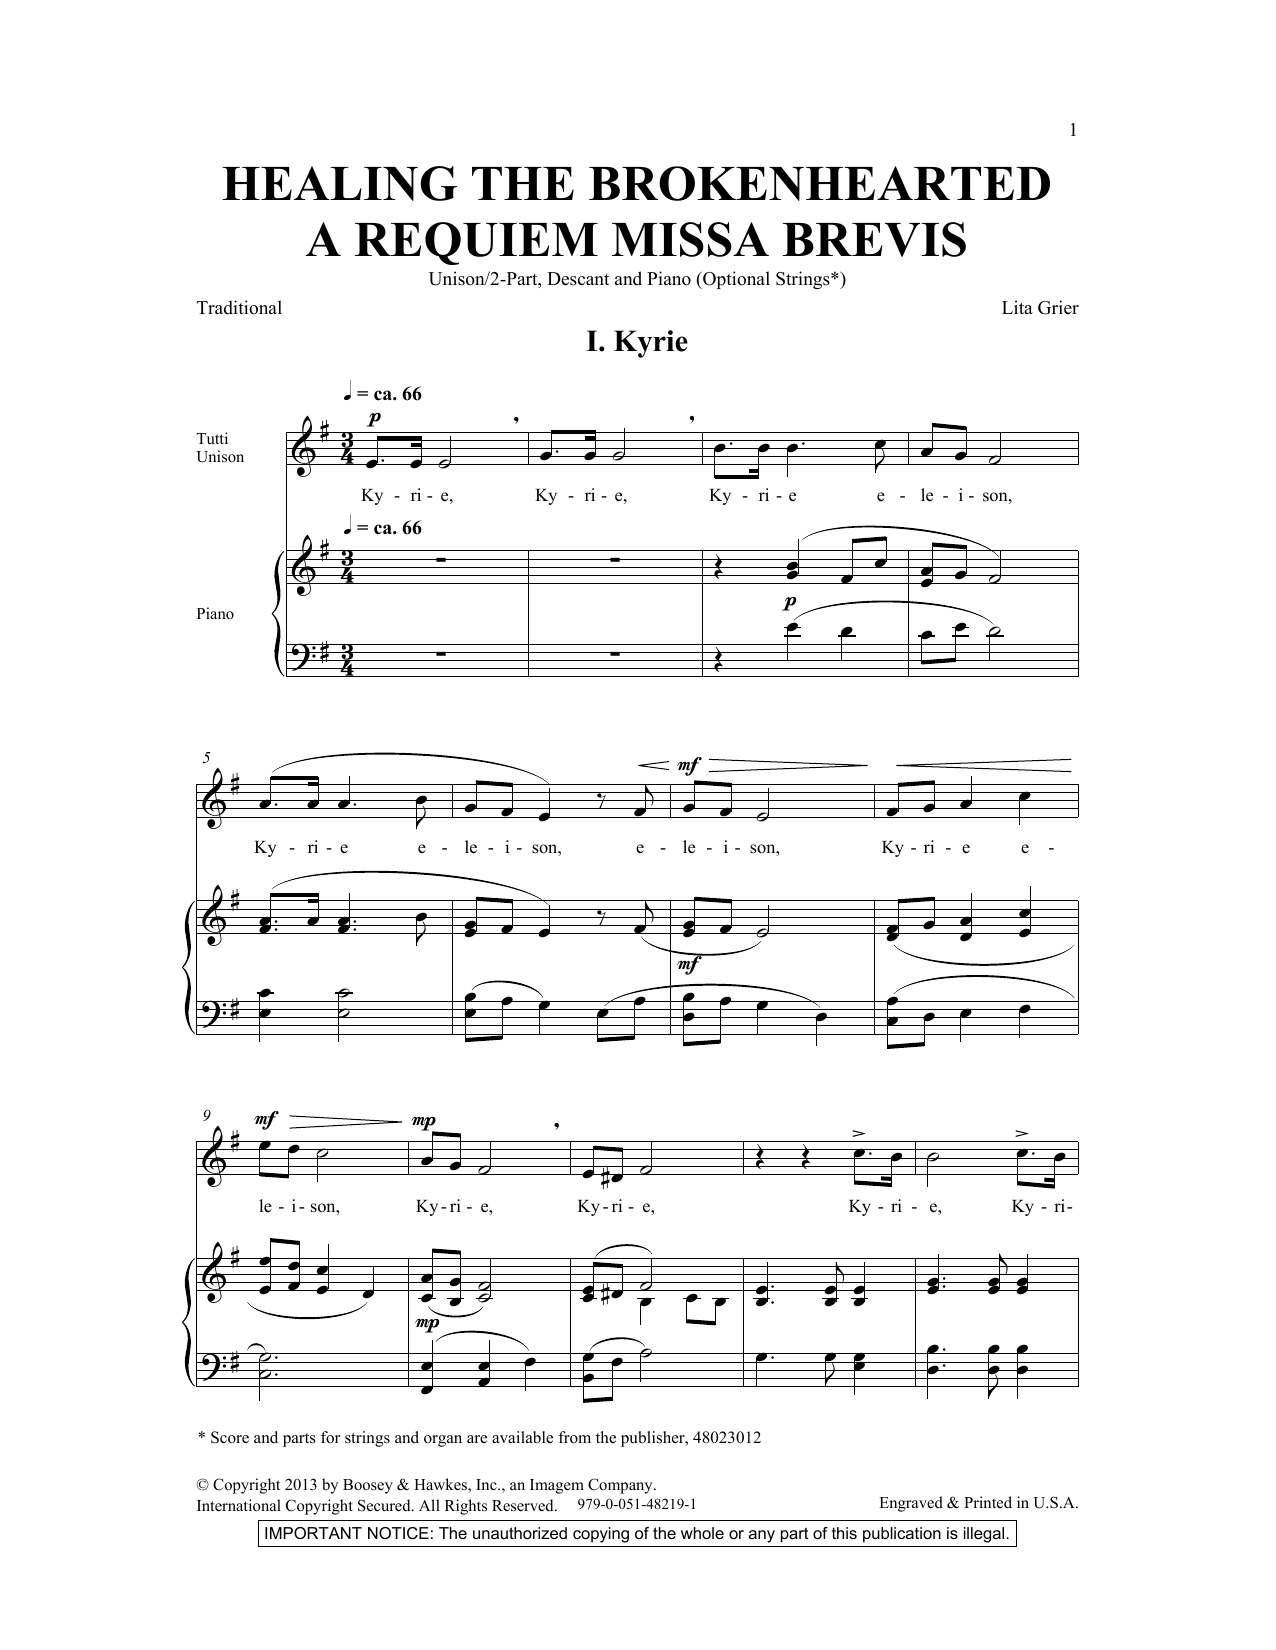 Lita Grier Healing The Brokenhearted (A Requiem Missa Brevis) sheet music notes and chords arranged for SSA Choir